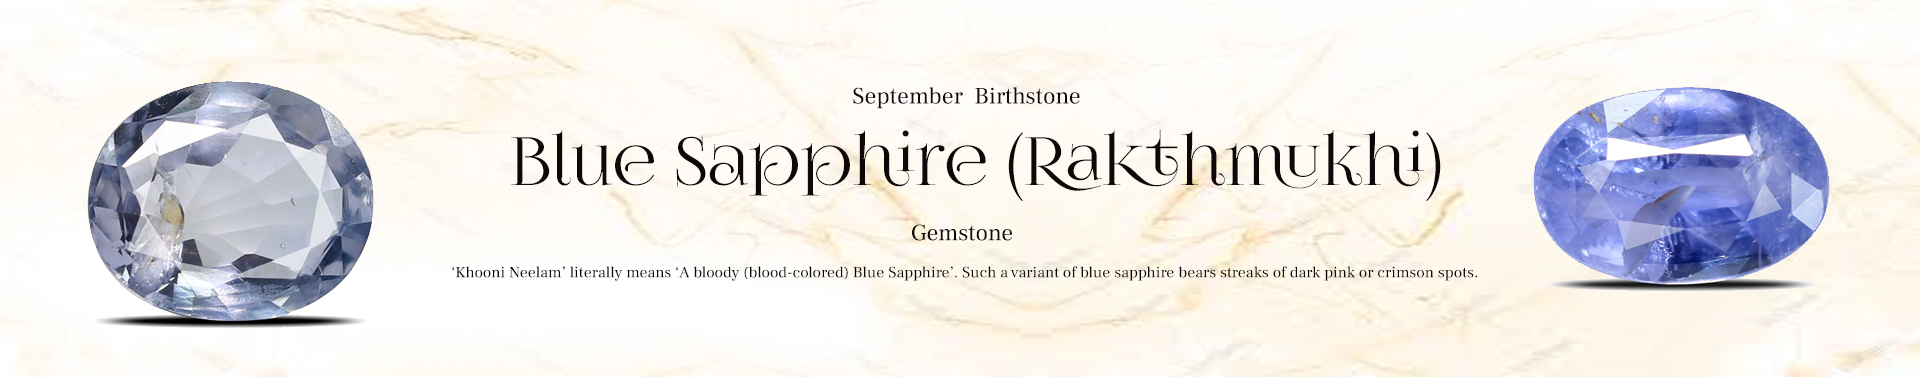 Blue Sapphire (Rakthmukhi)